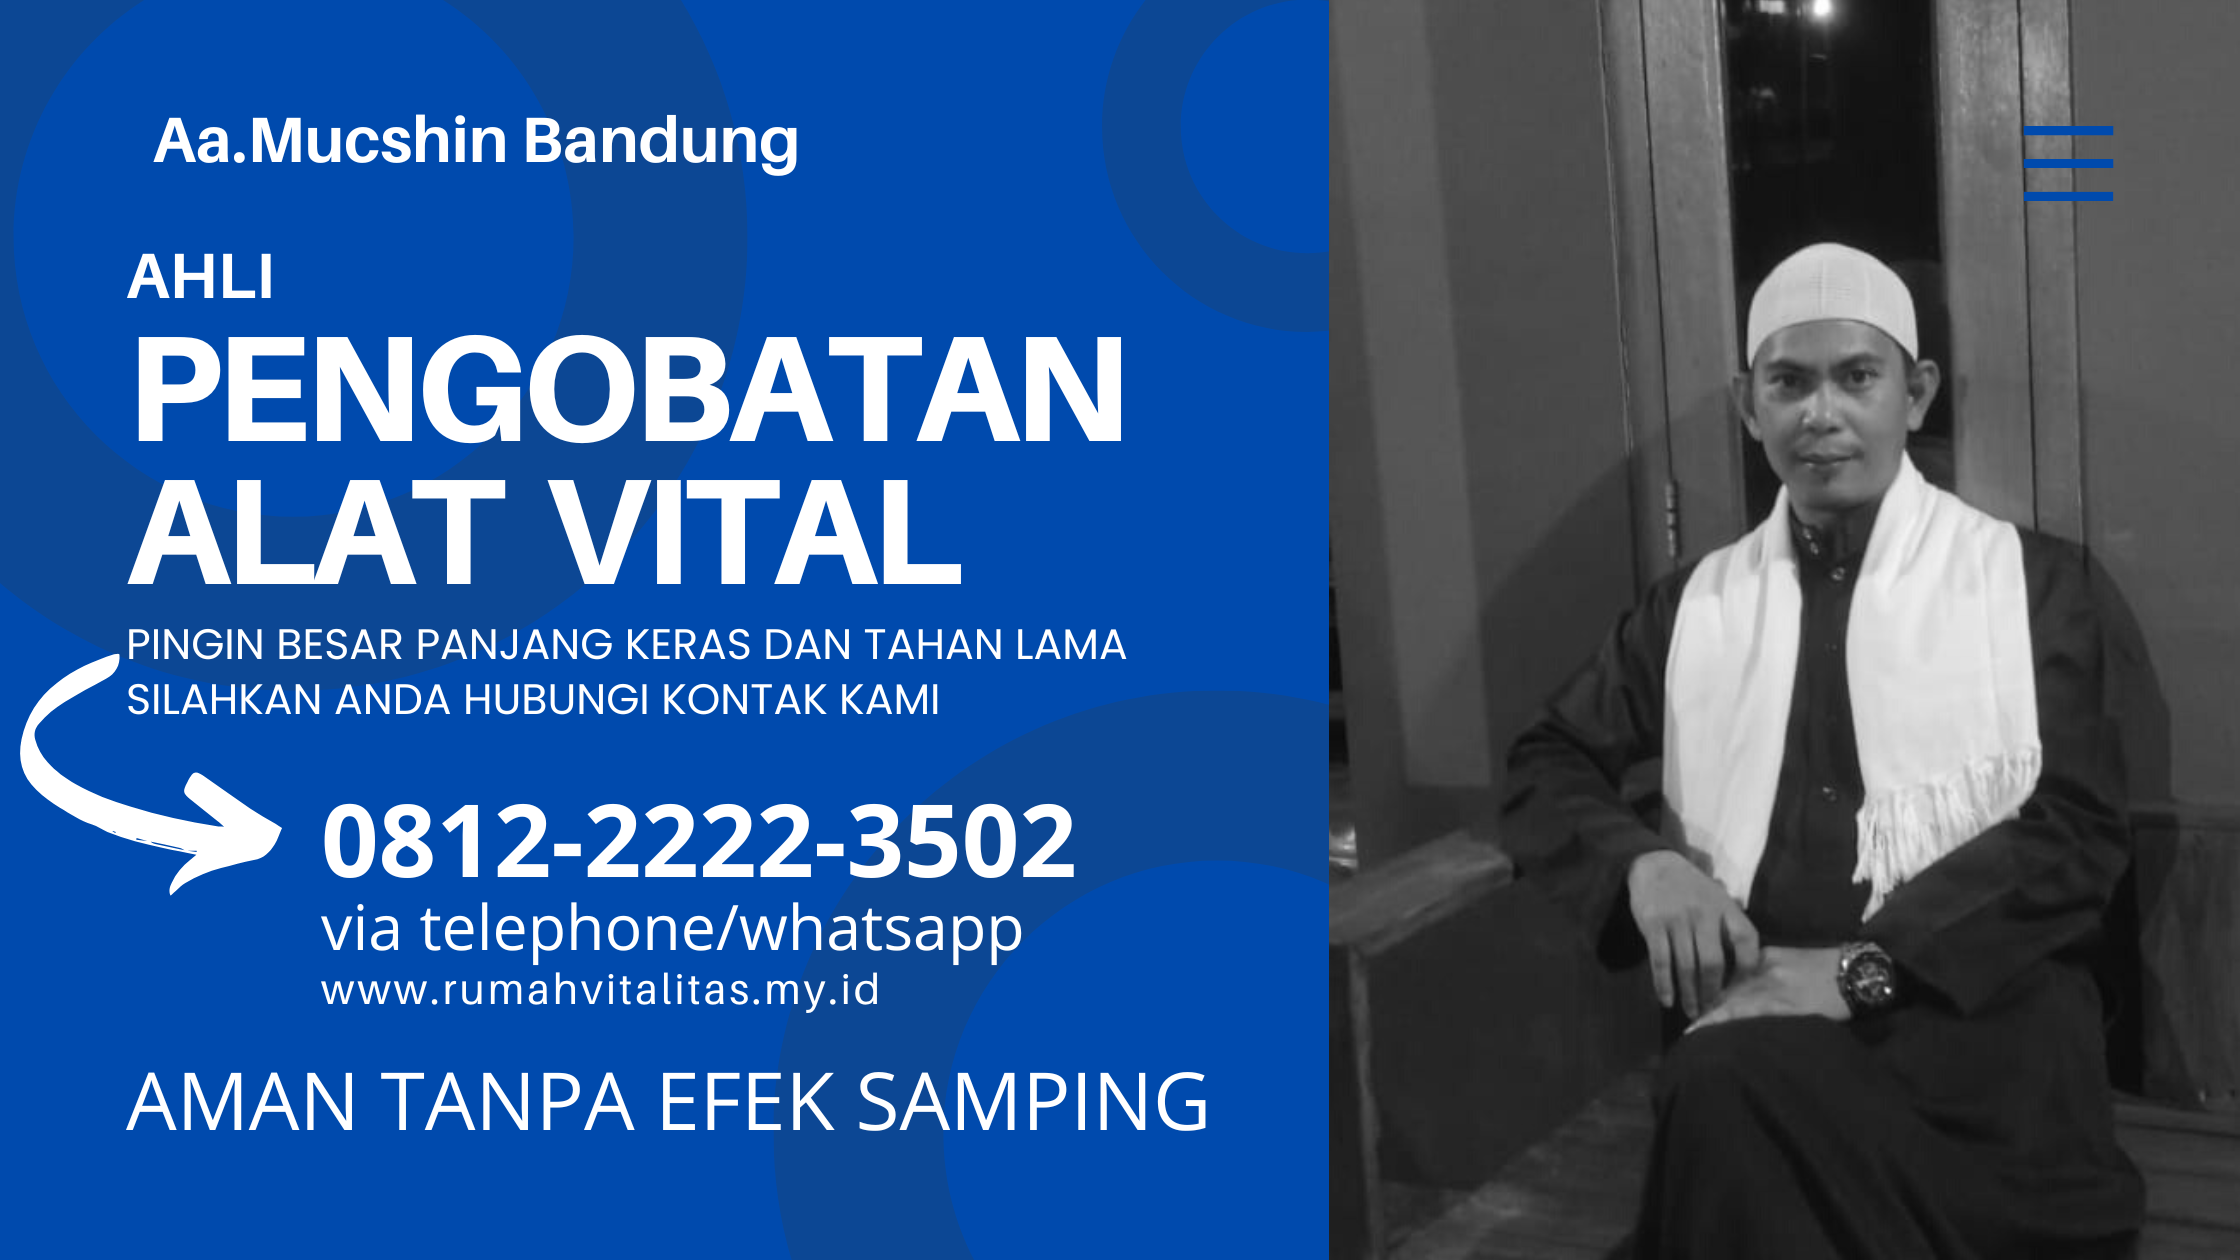 Kisah Sukses Jasa Ahli Vitalitas Bandung Aa.Muchsin